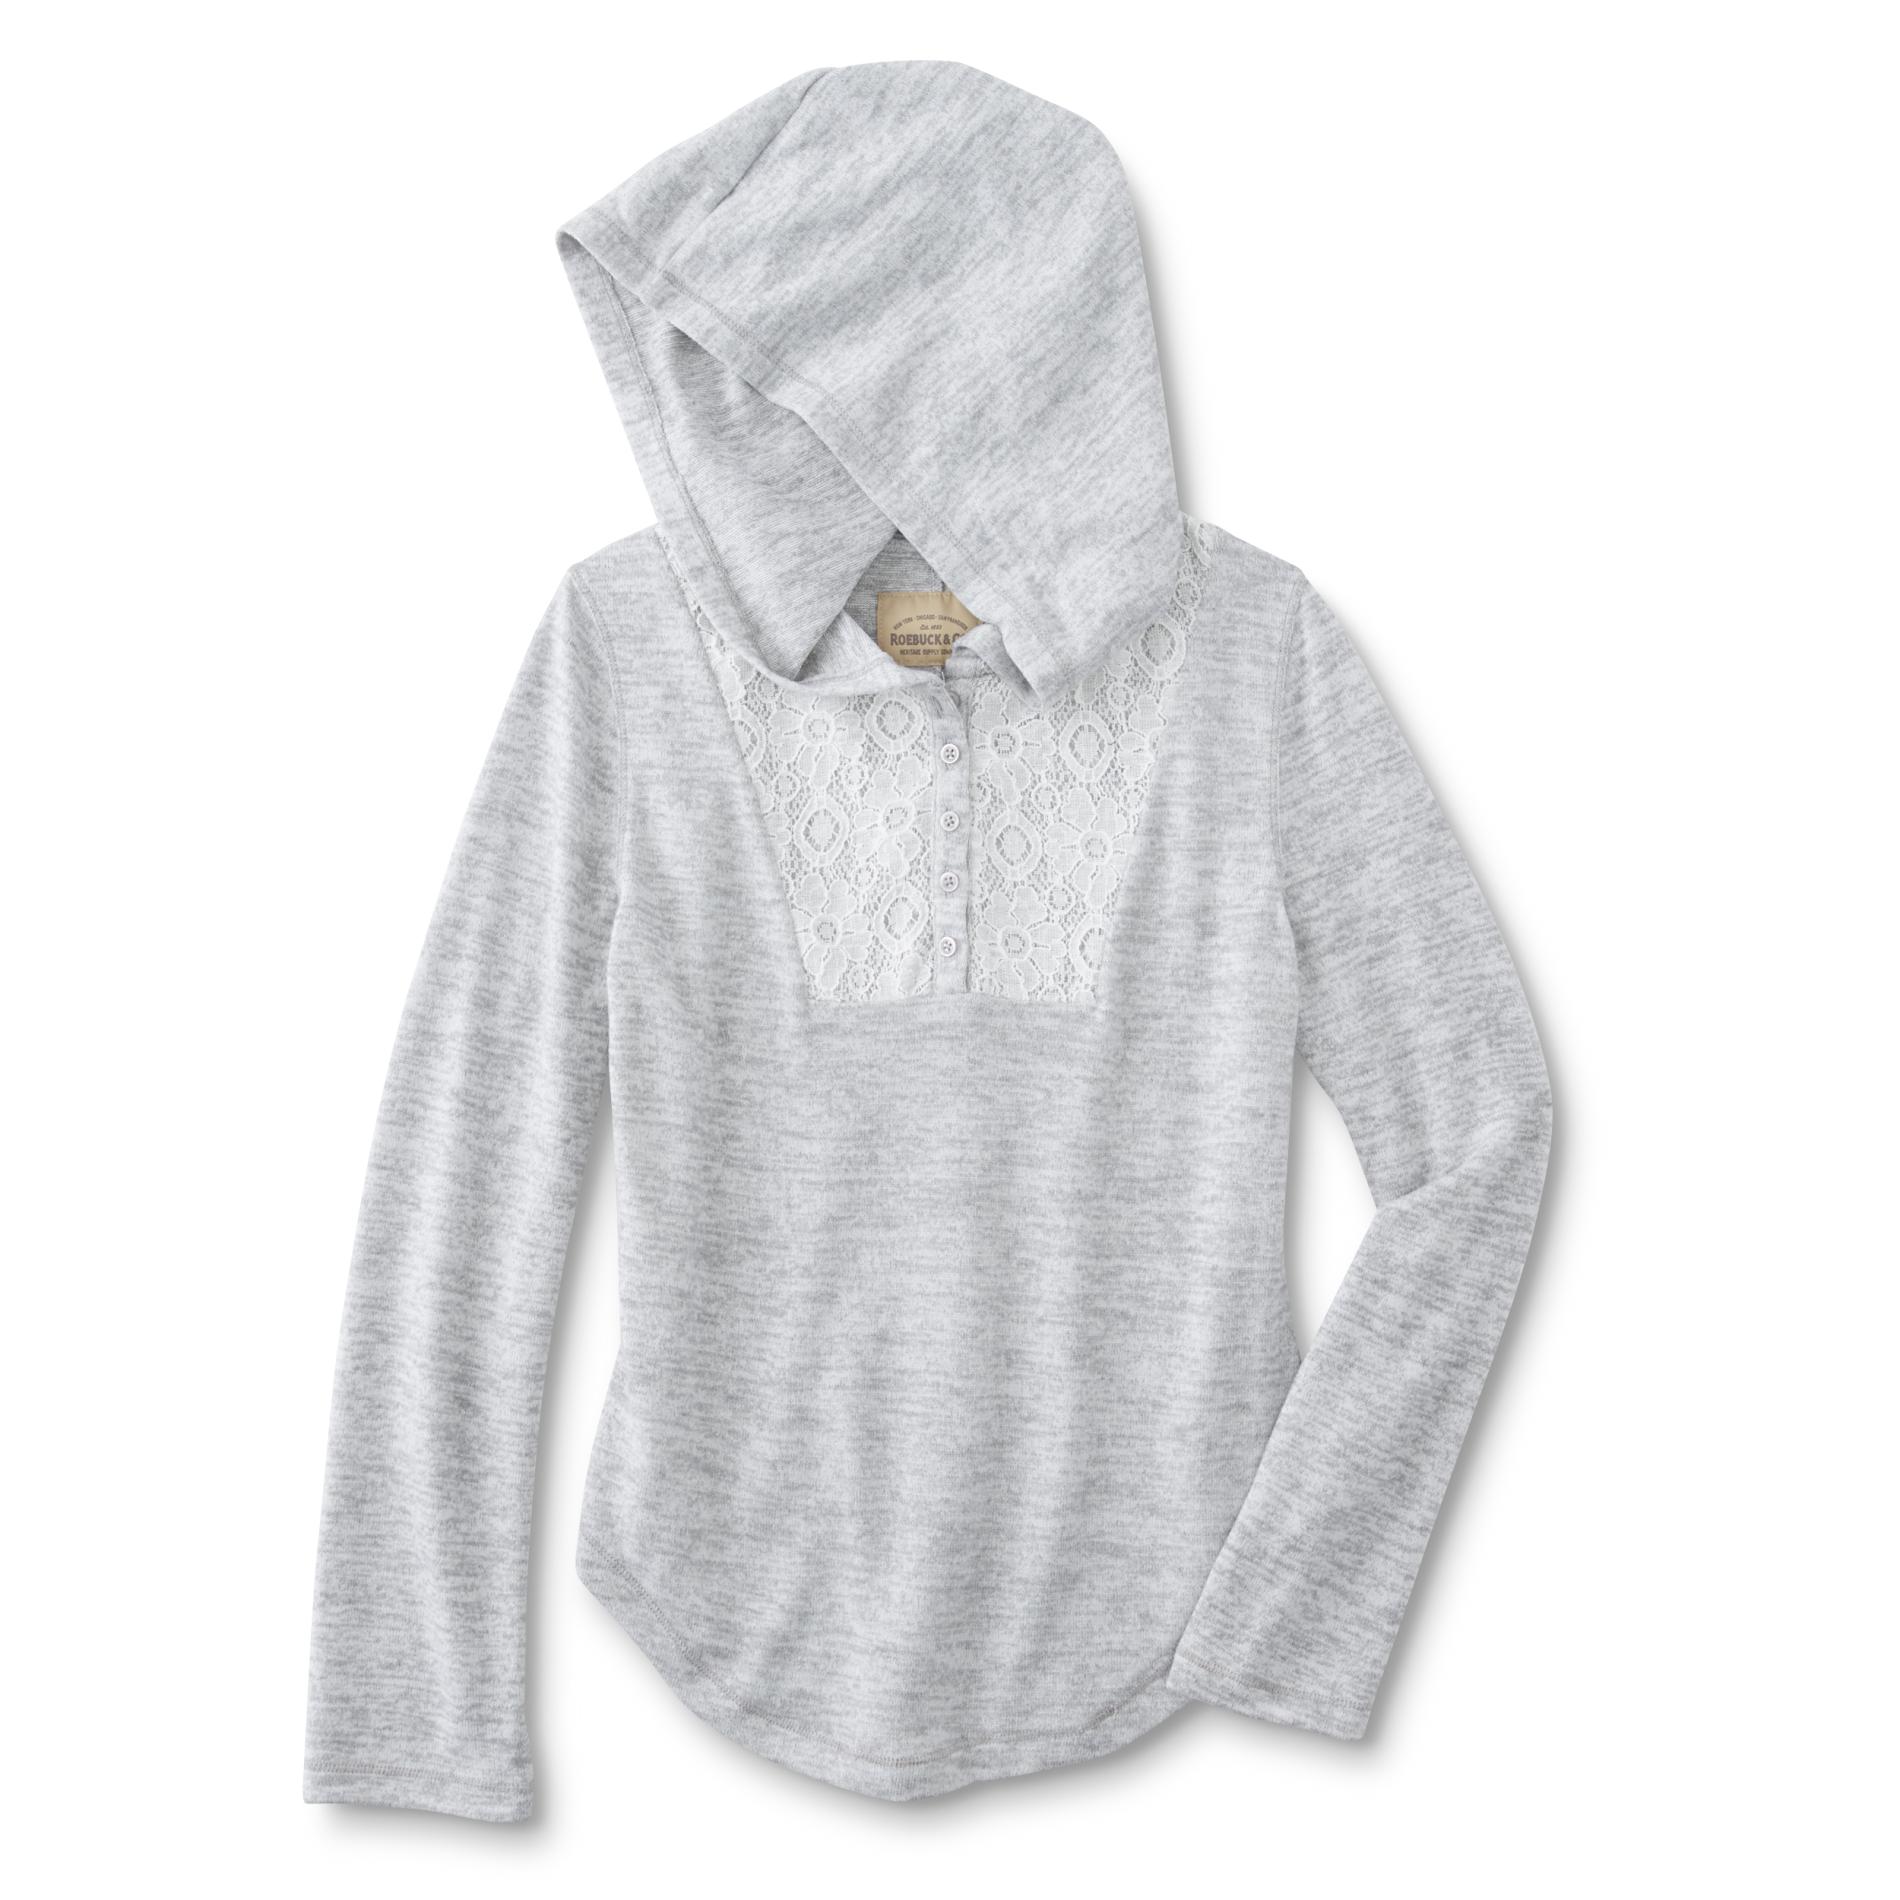 ROEBUCK & CO R1893 Girls' Hooded Sweater